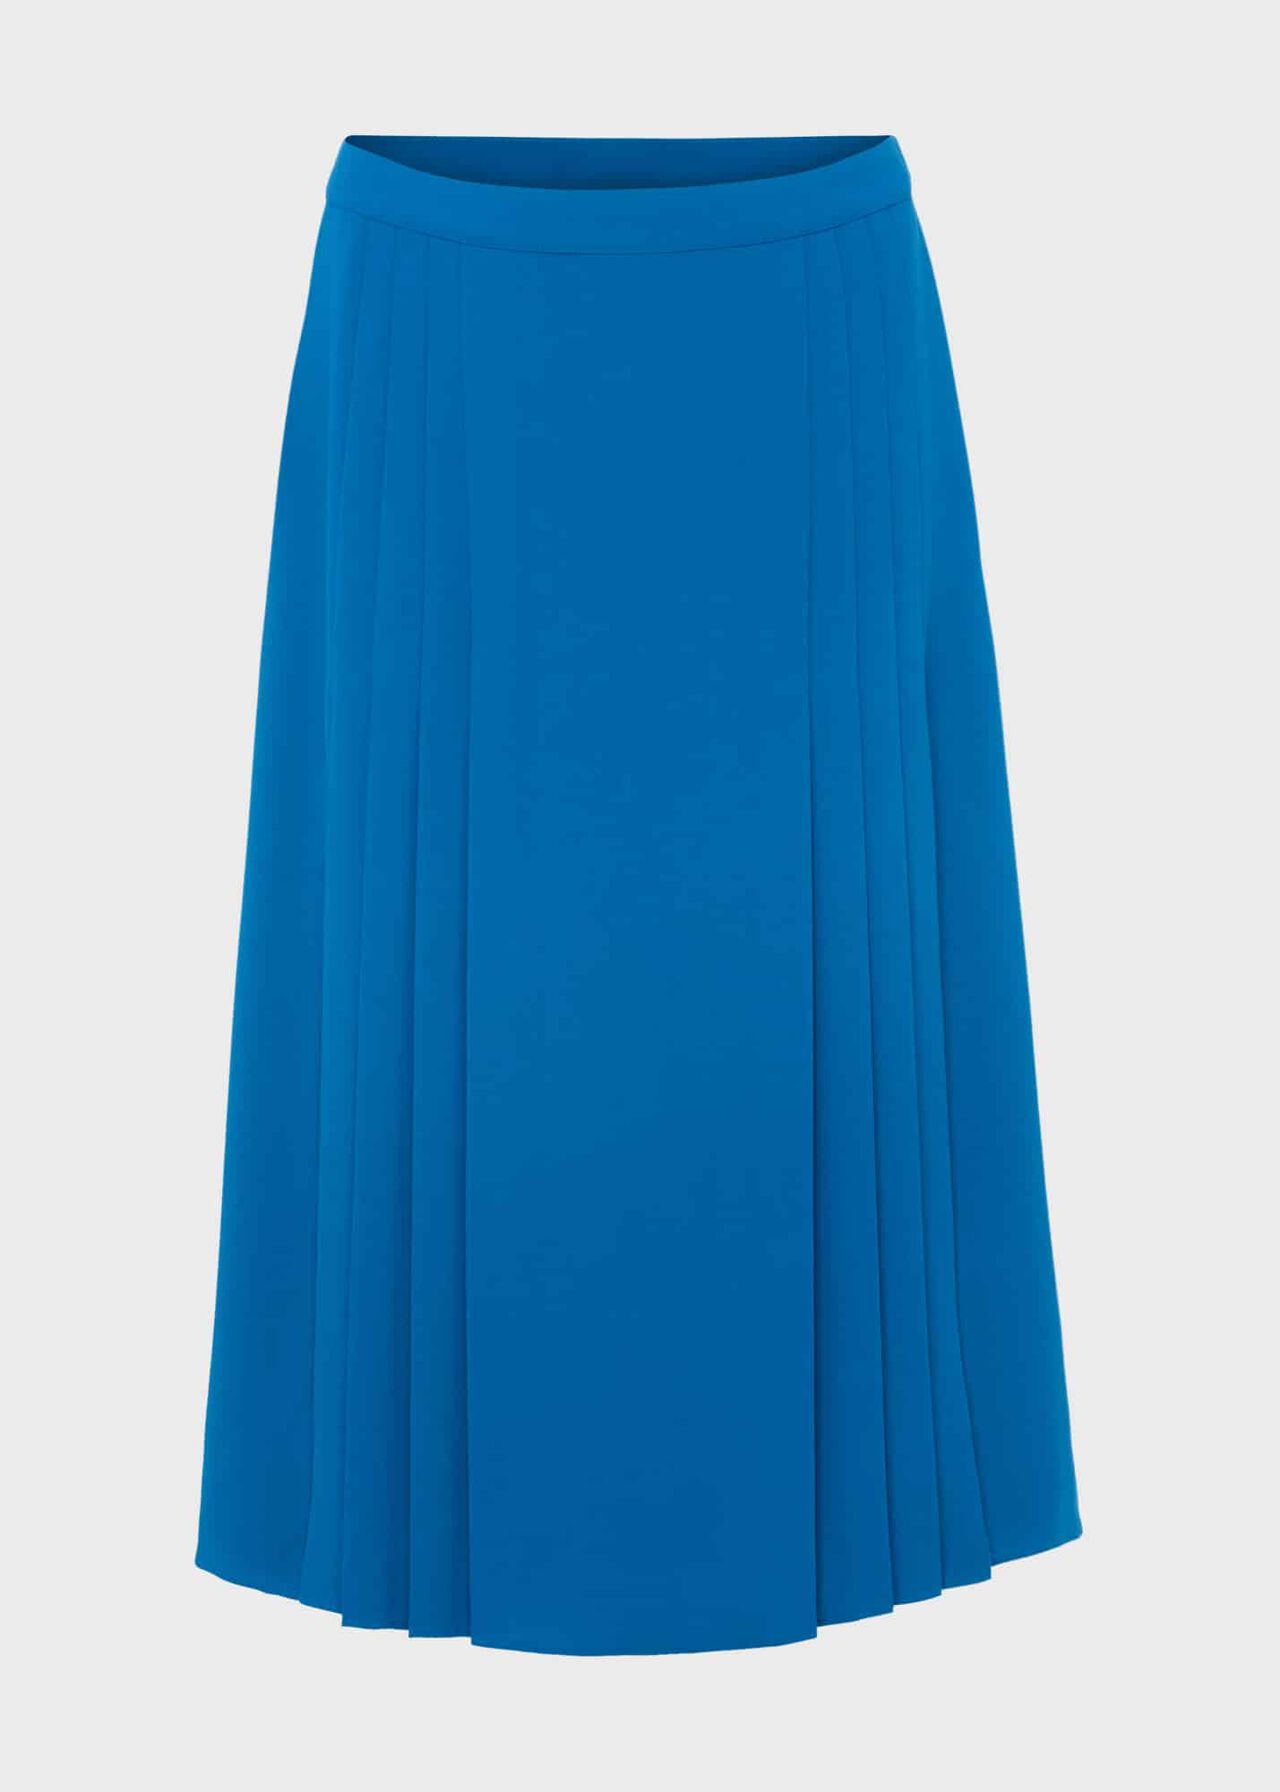 Everleigh Skirt, Imperial Blue, hi-res